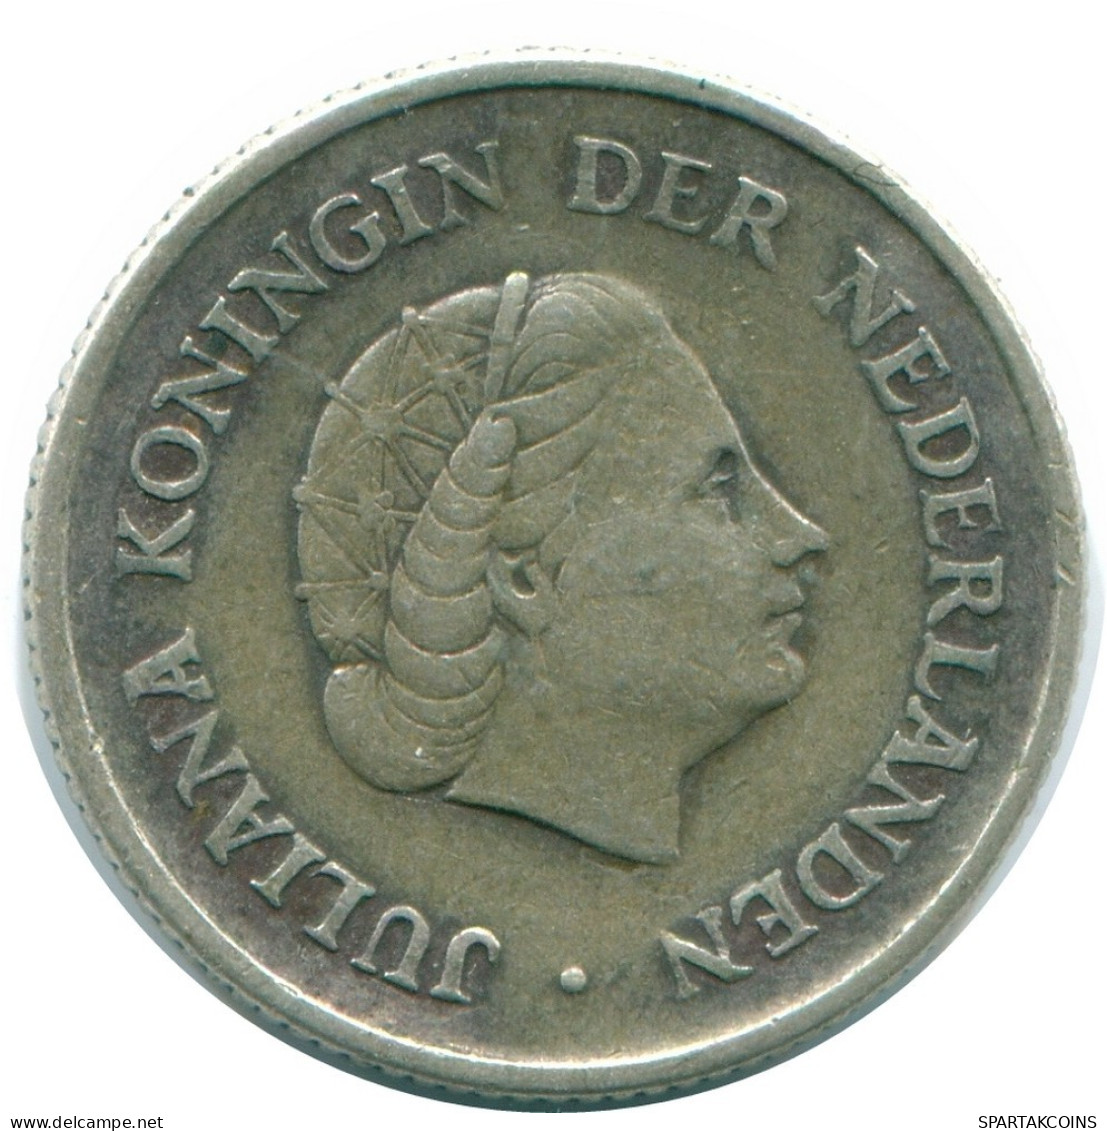 1/4 GULDEN 1965 NETHERLANDS ANTILLES SILVER Colonial Coin #NL11405.4.U.A - Antilles Néerlandaises